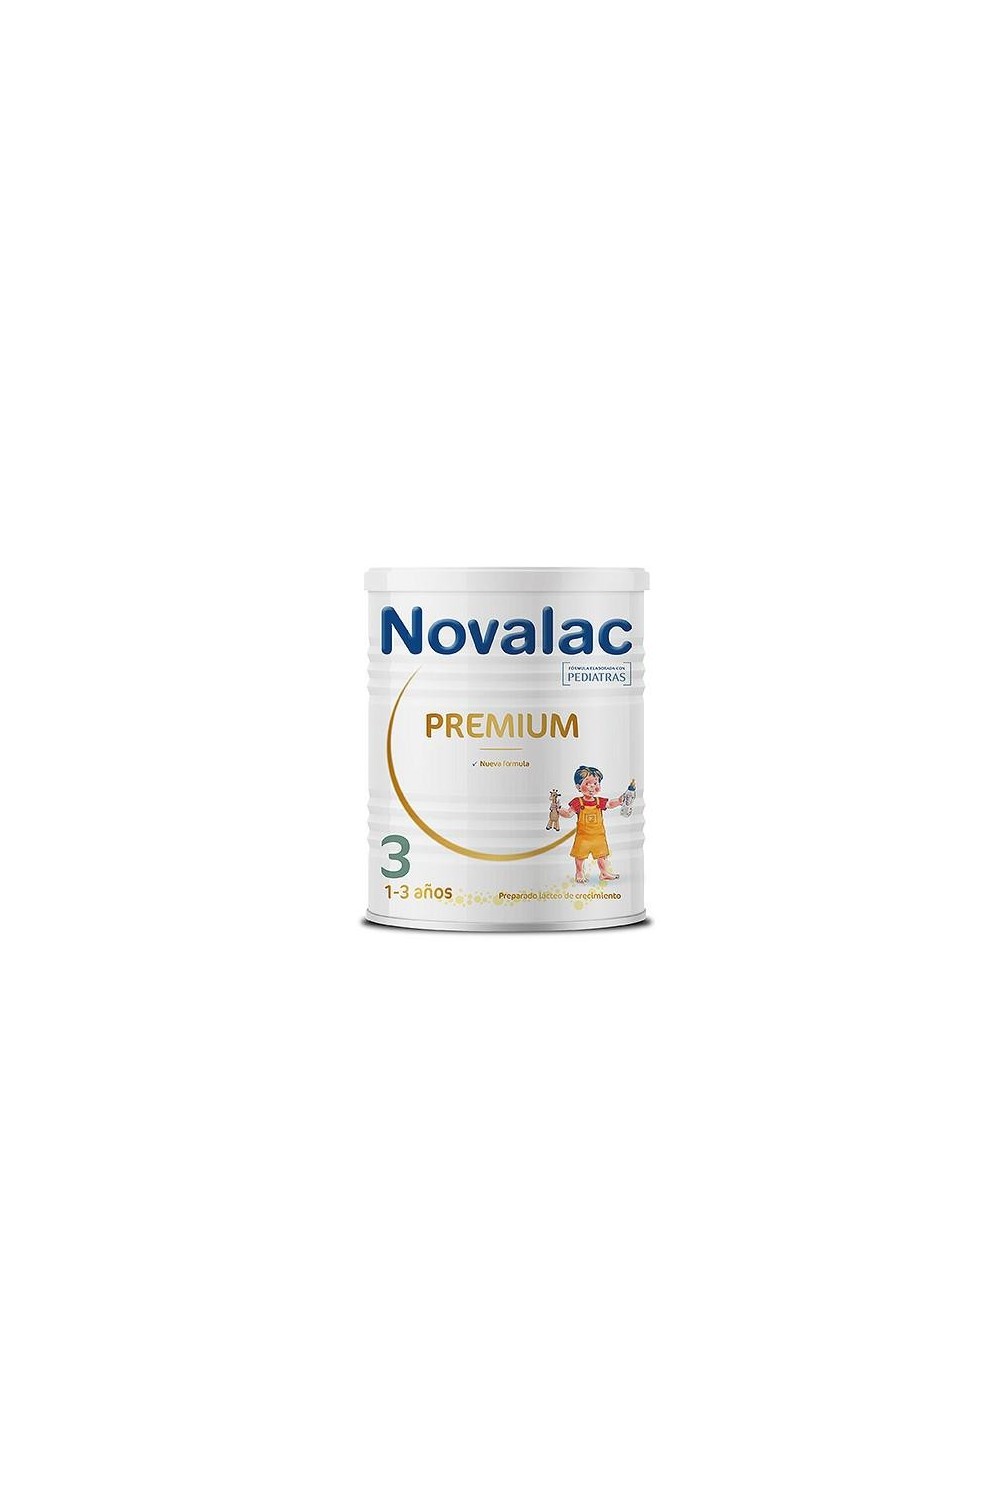 Novalac 3 Premium 800g